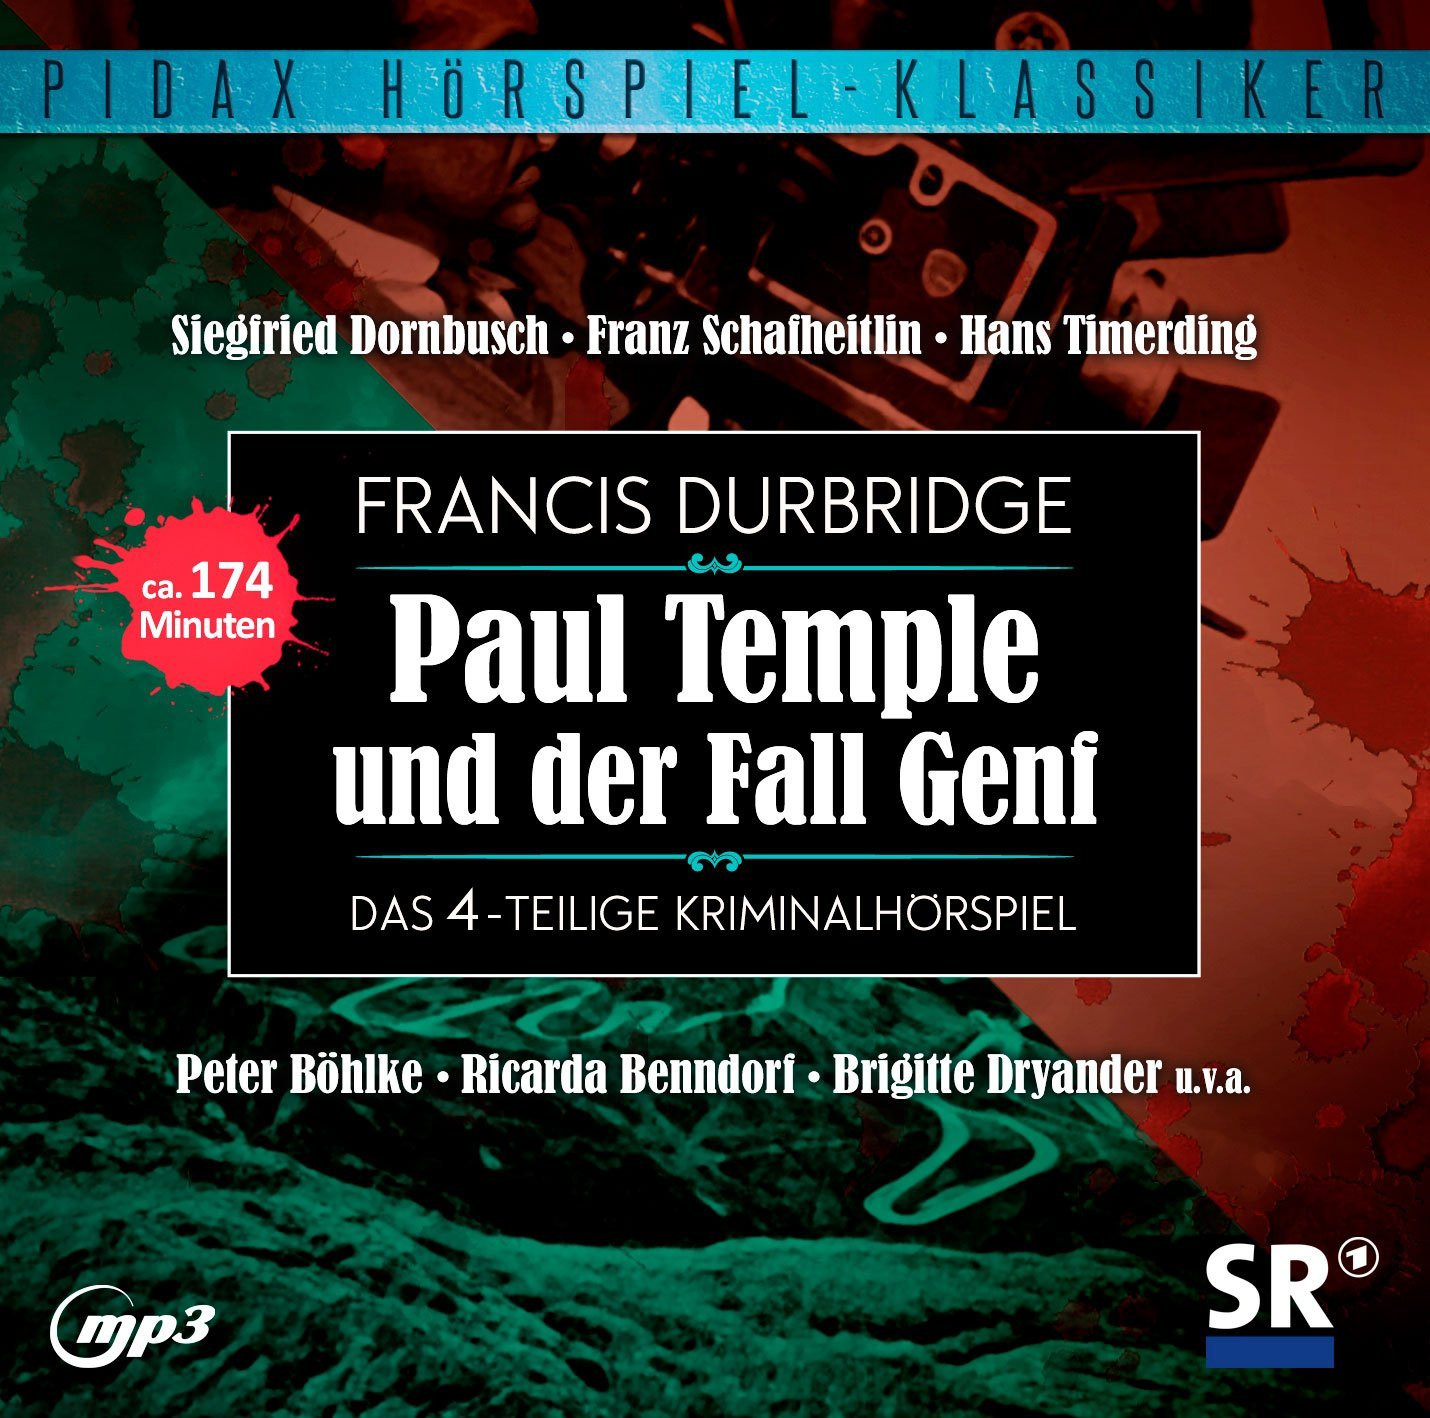 Pidax Hörspiel Klassiker - Paul Temple und der Fall in Genf